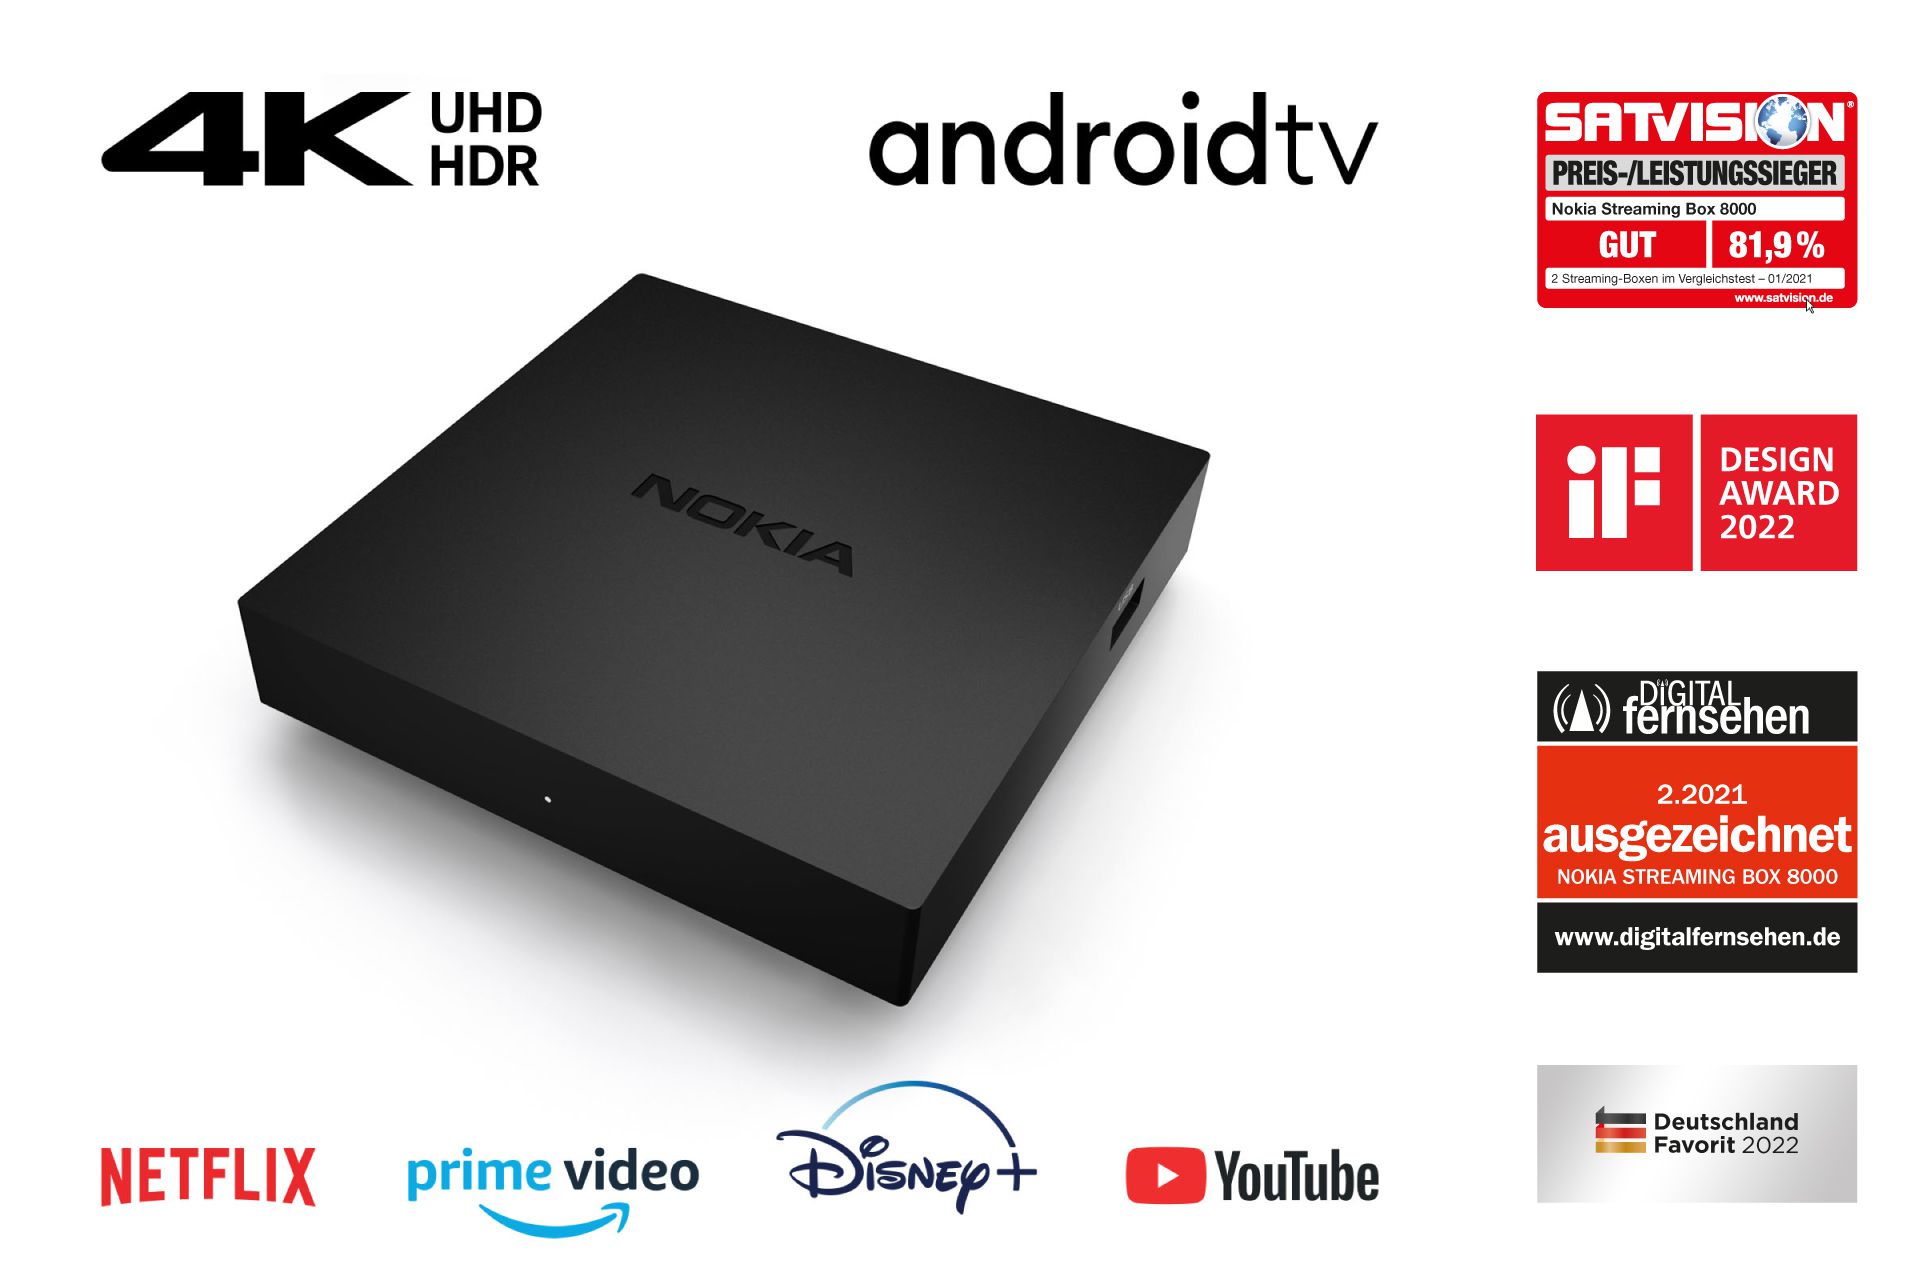 Nokia Streaming Box 8000 4K Ultra HD Android TV Box